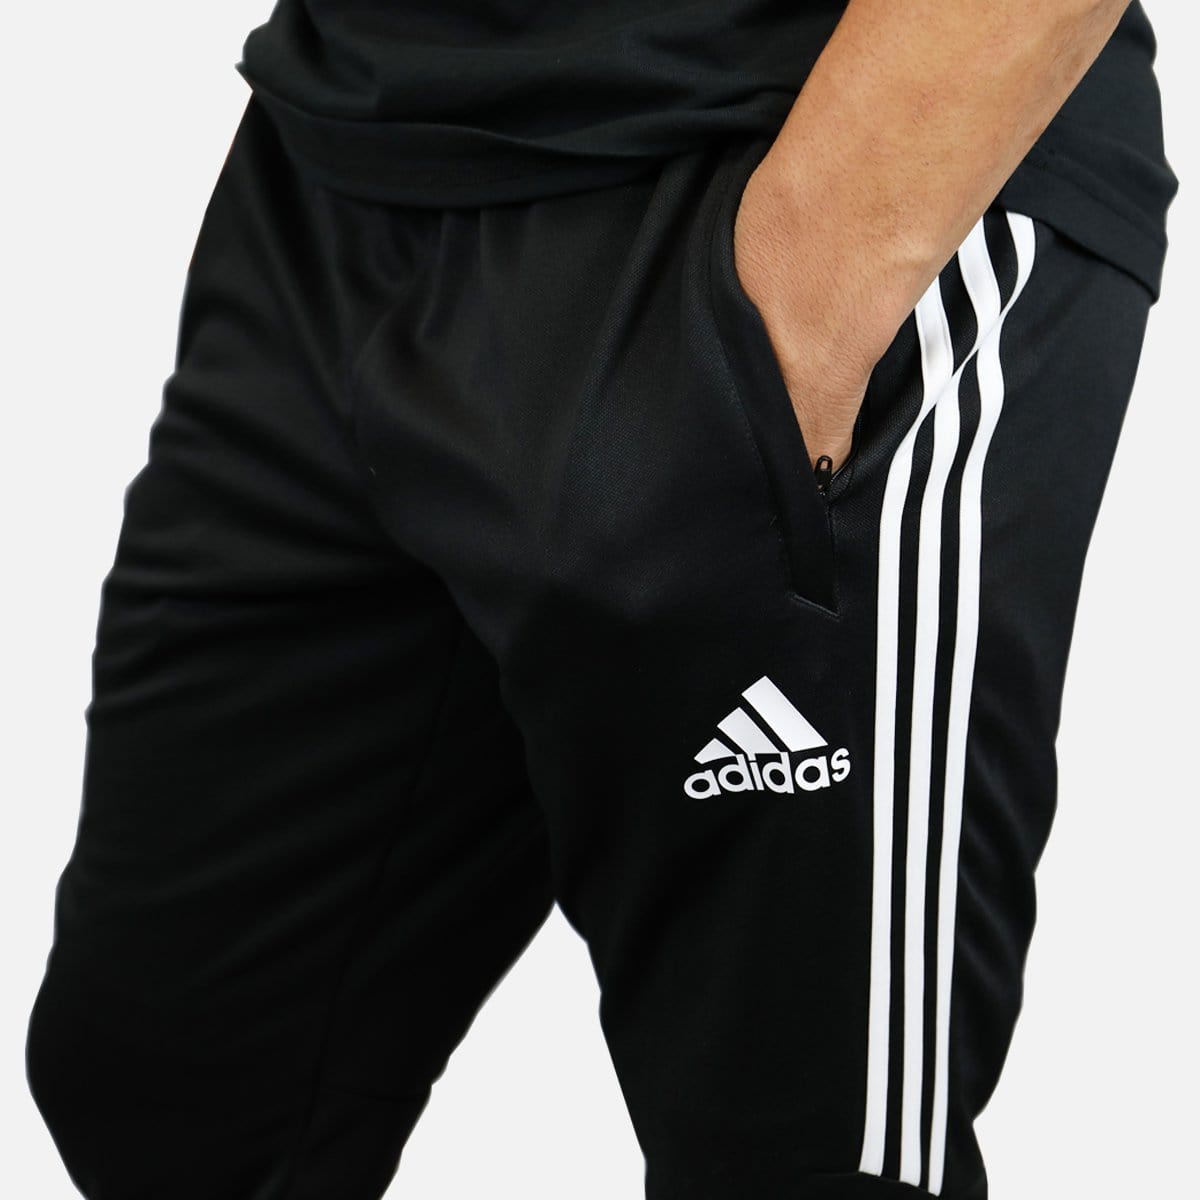 adidas Tiro 17 Training Sweatpants (Black/White)